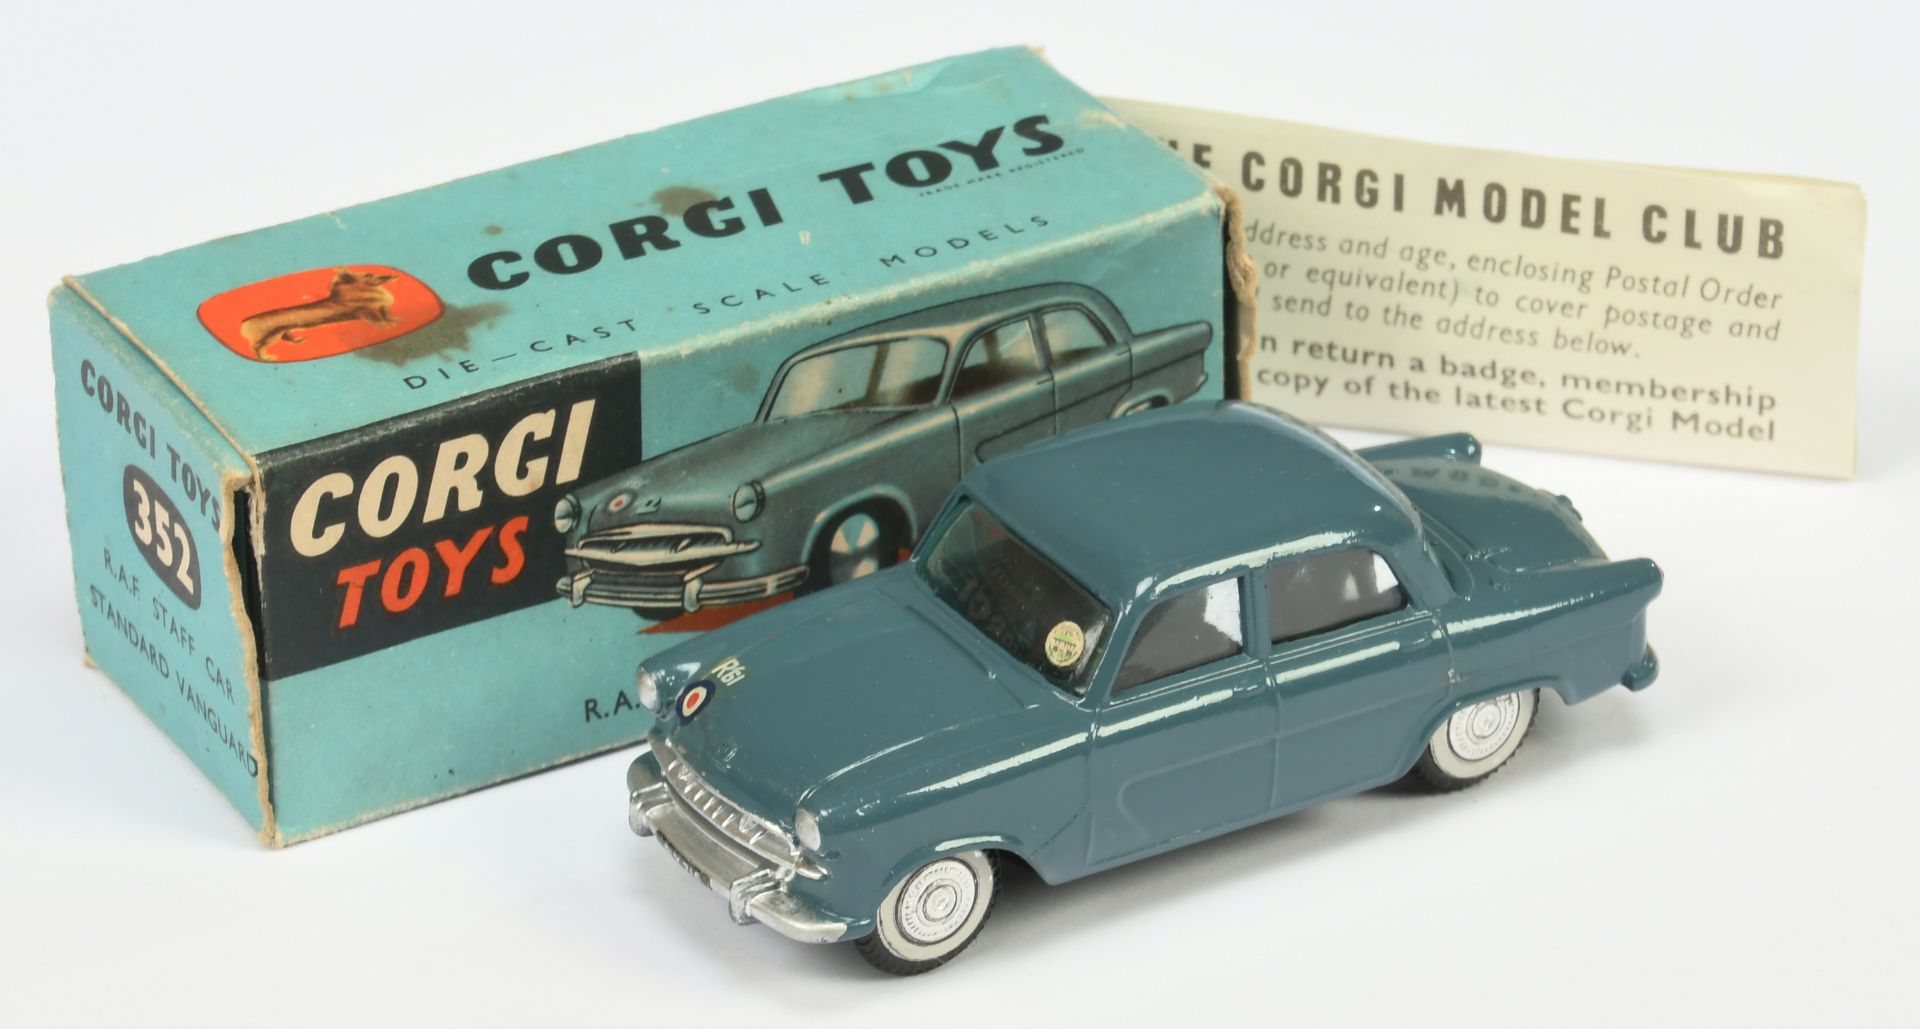 Corgi Toys 352 Standard Vanguard "RAF" Car - Greyish-blue, silver trim, flat spun hubs (Accessory...